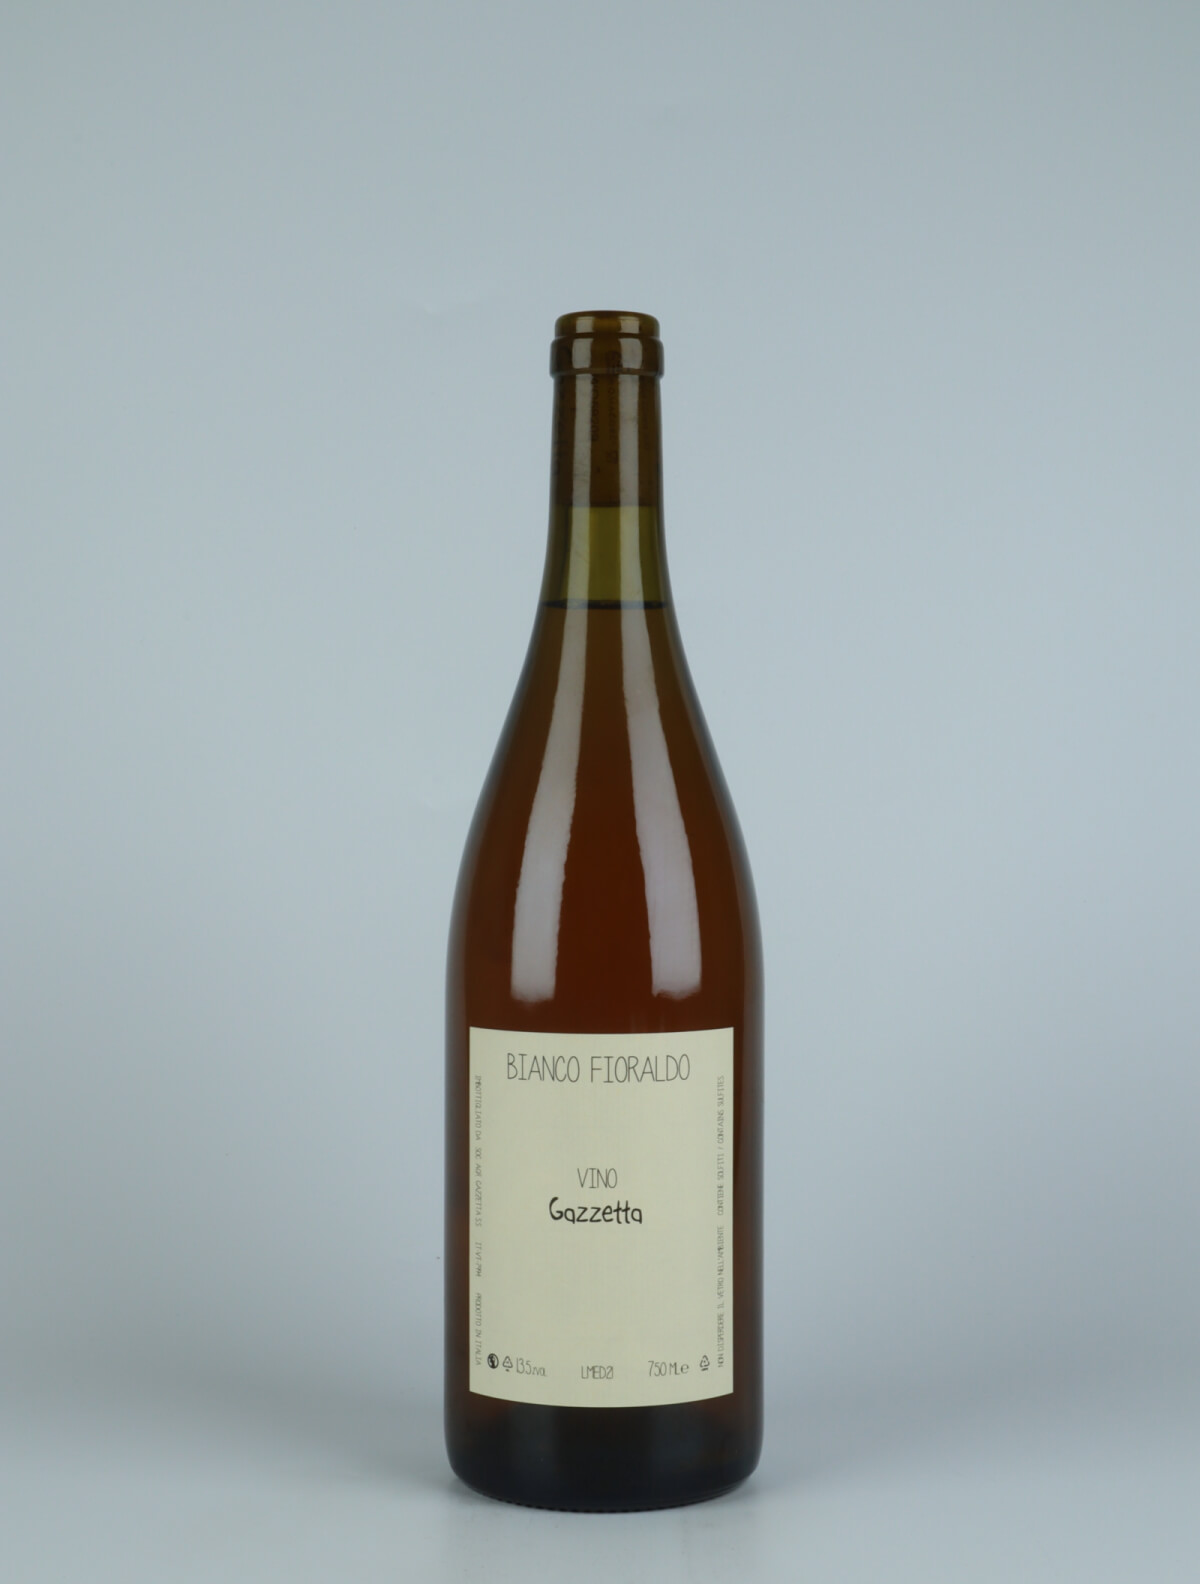 En flaske 2021 Vino Bianco Fioraldo Orange vin fra Gazzetta, Lazio i Italien